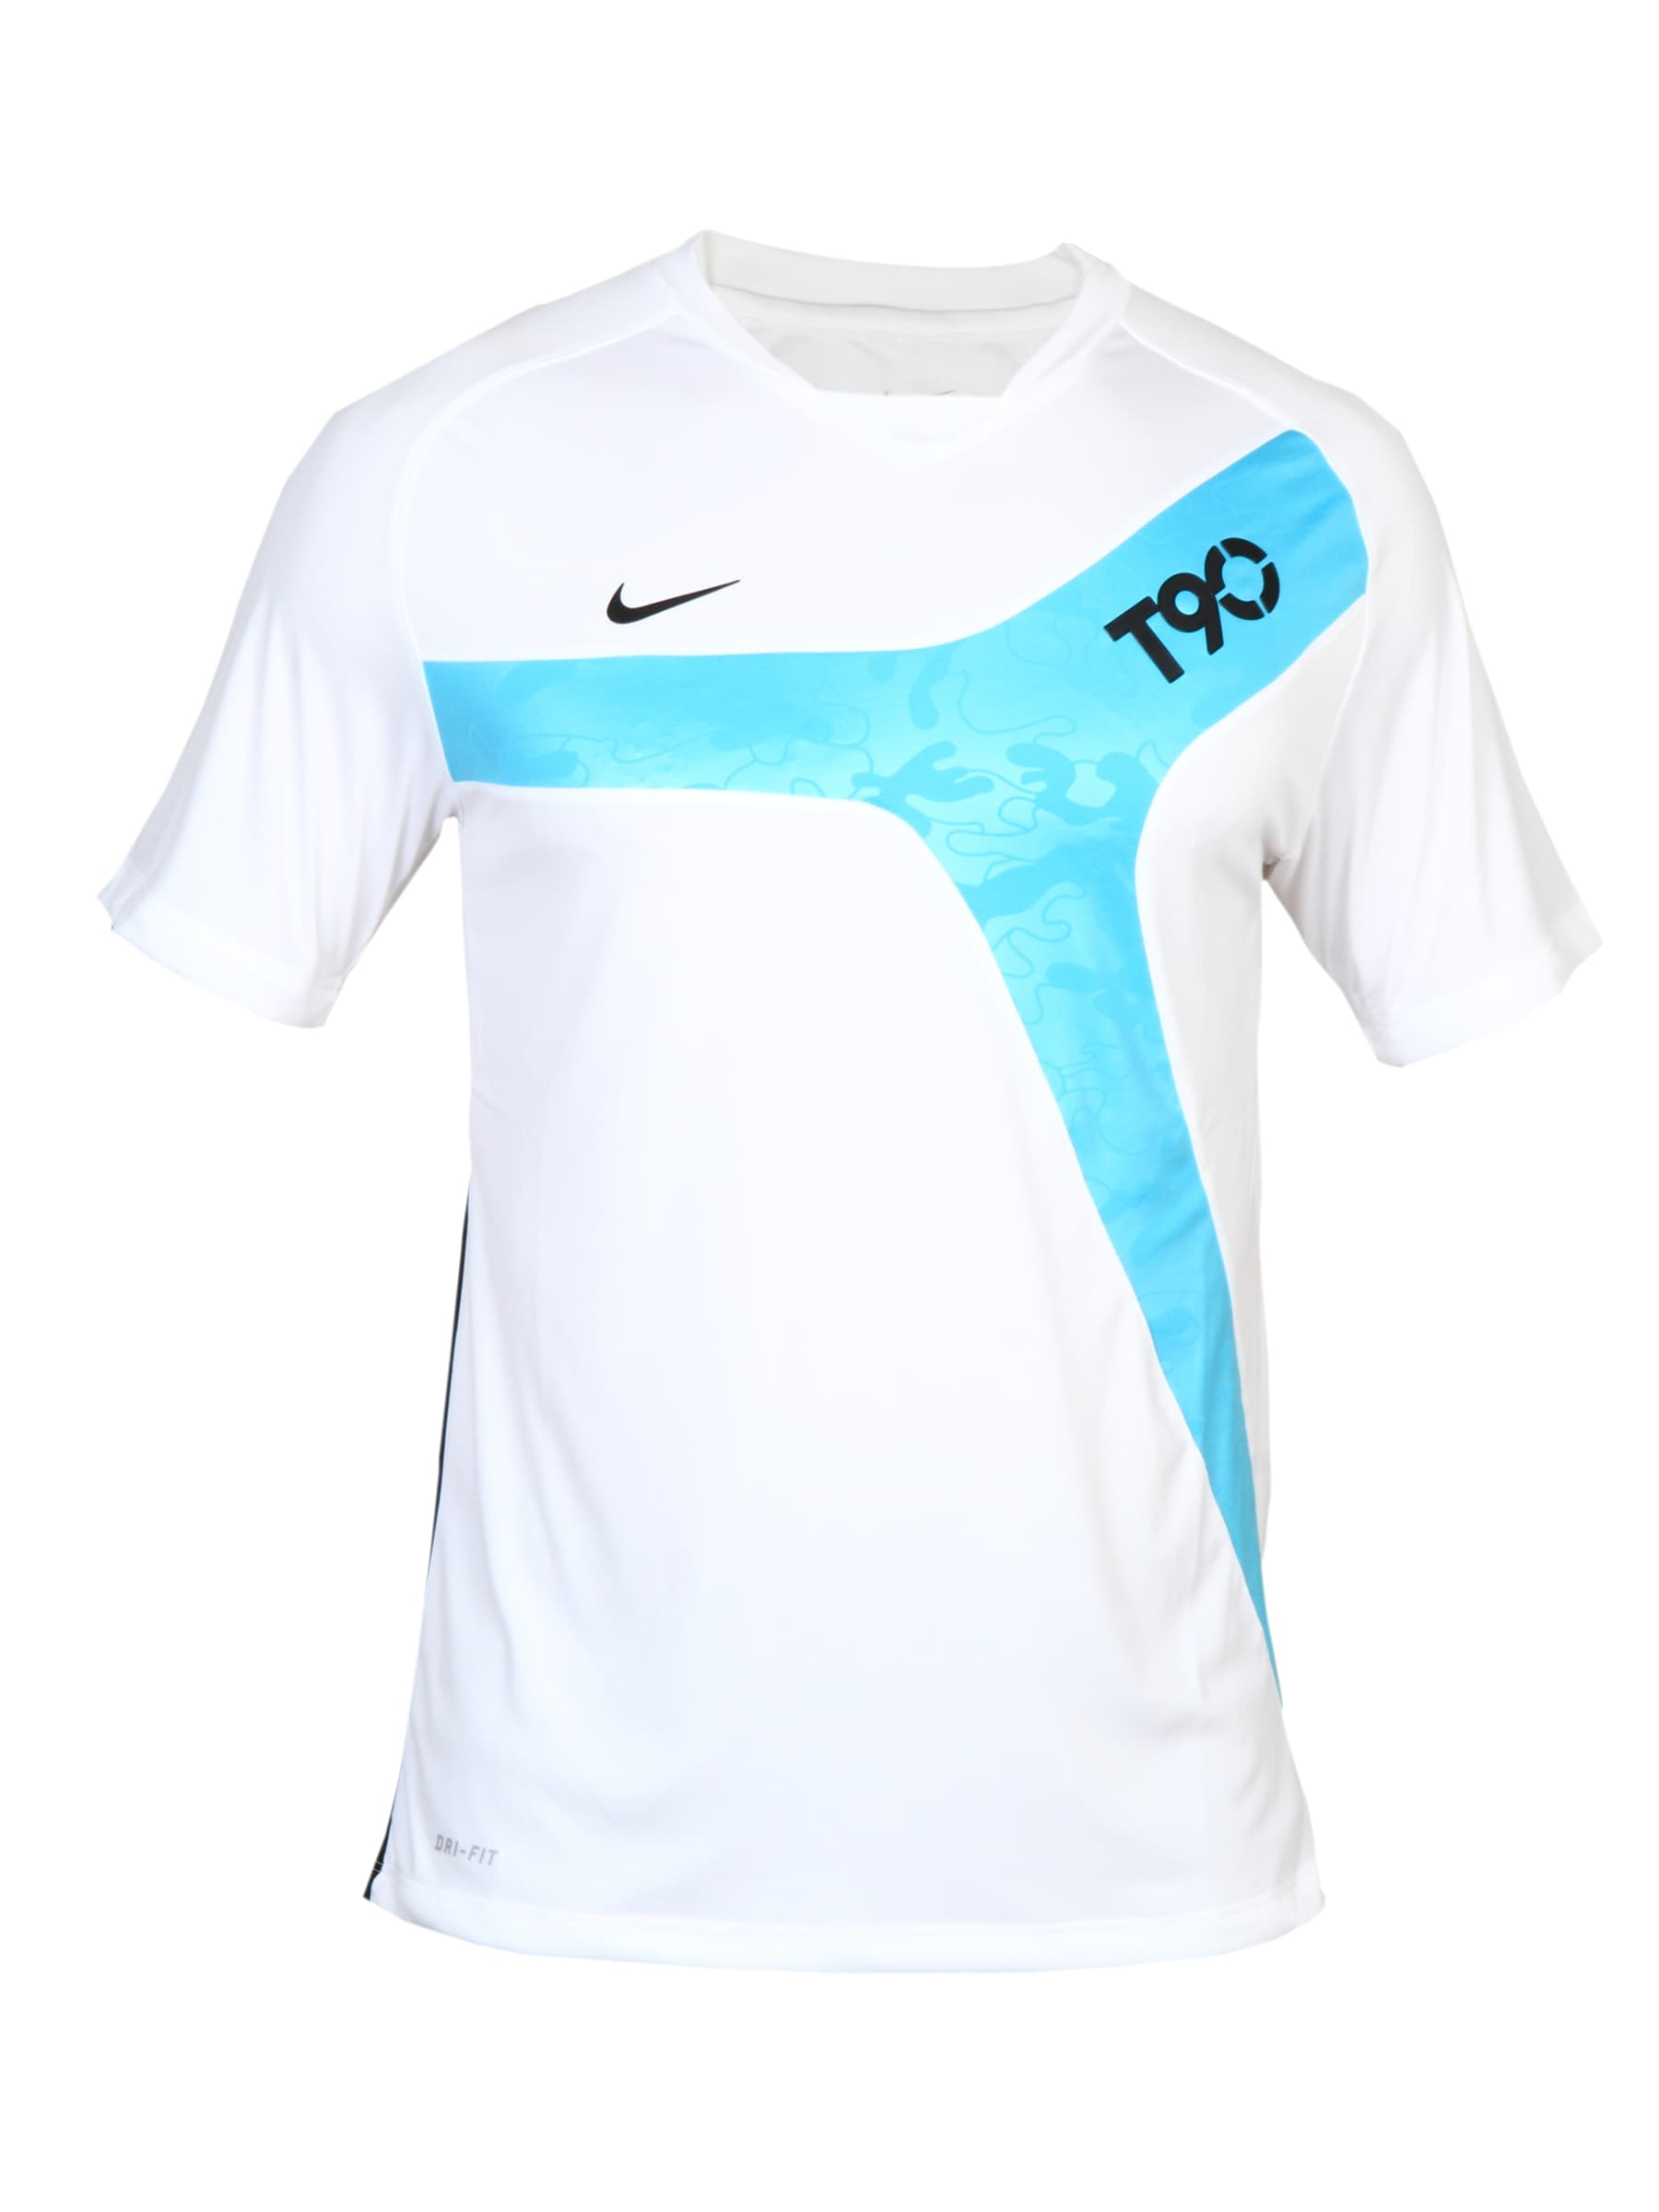 Nike Men's As T90 SS White Blue T-shirt